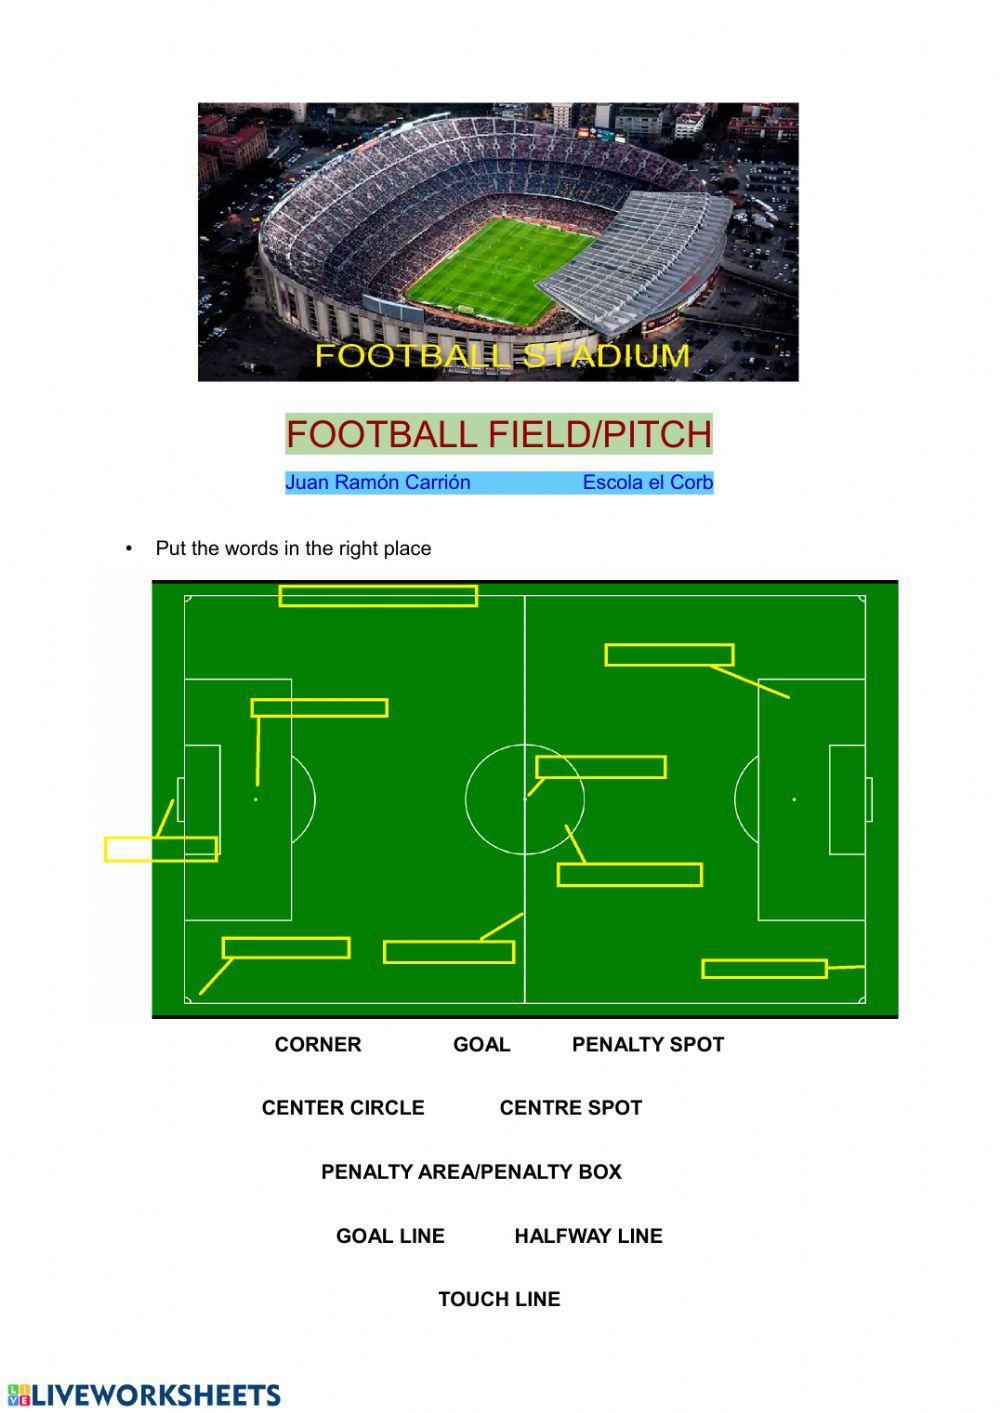 Football field-pitch